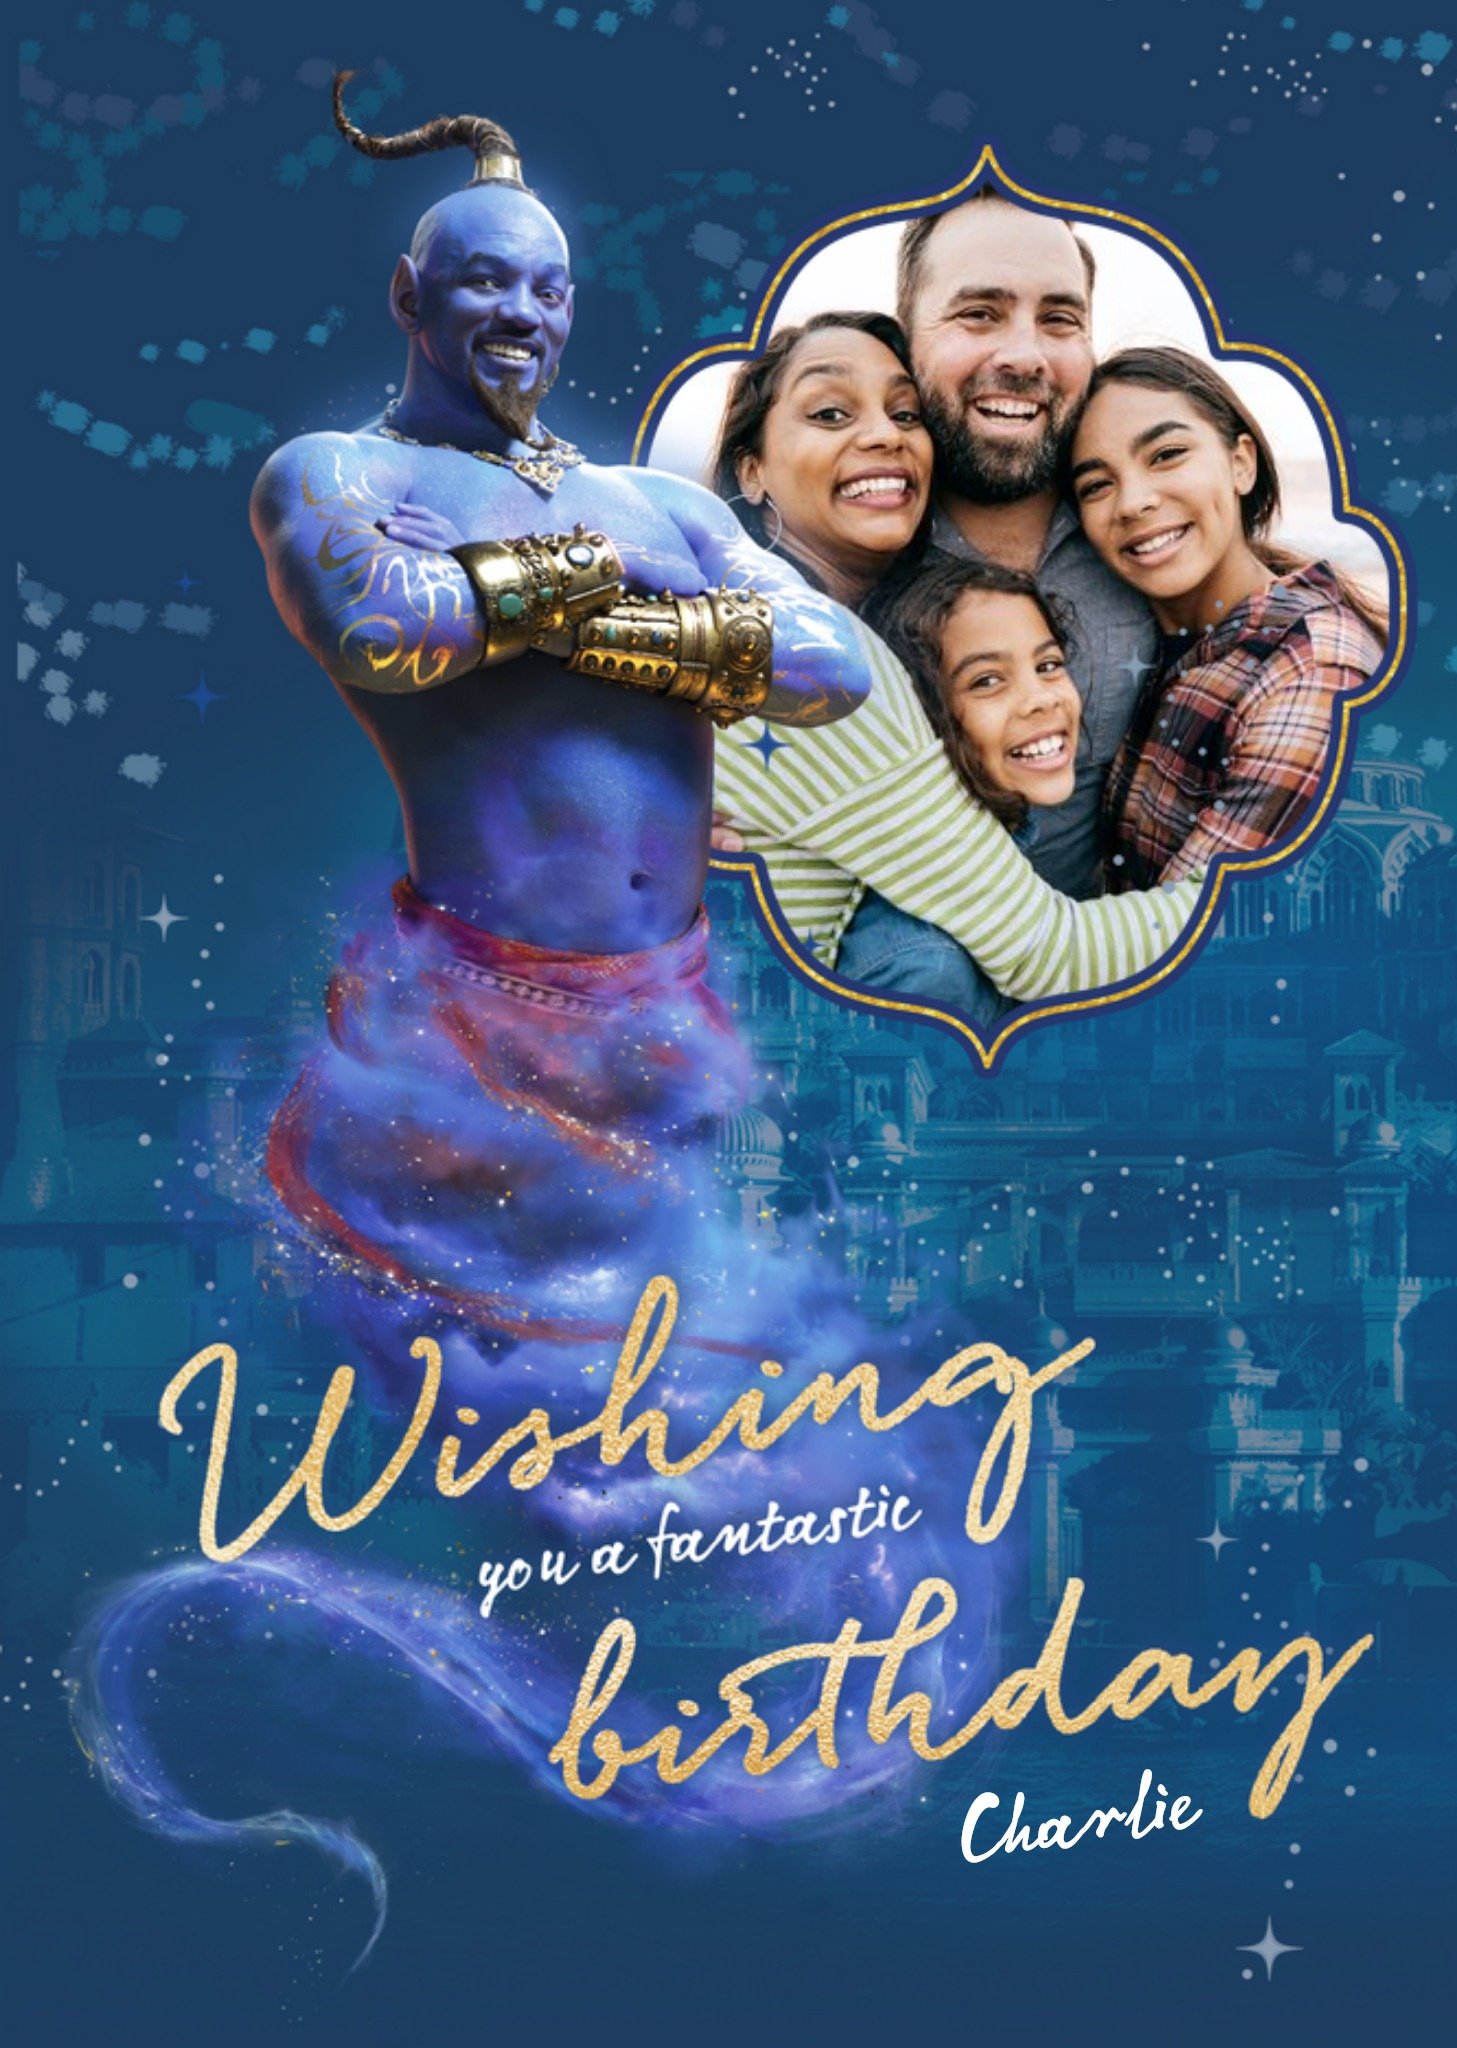 Disney Aladdin Film Photo Upload Birthday Card - Wishing You A Fantastic Birthday From The Genie, La